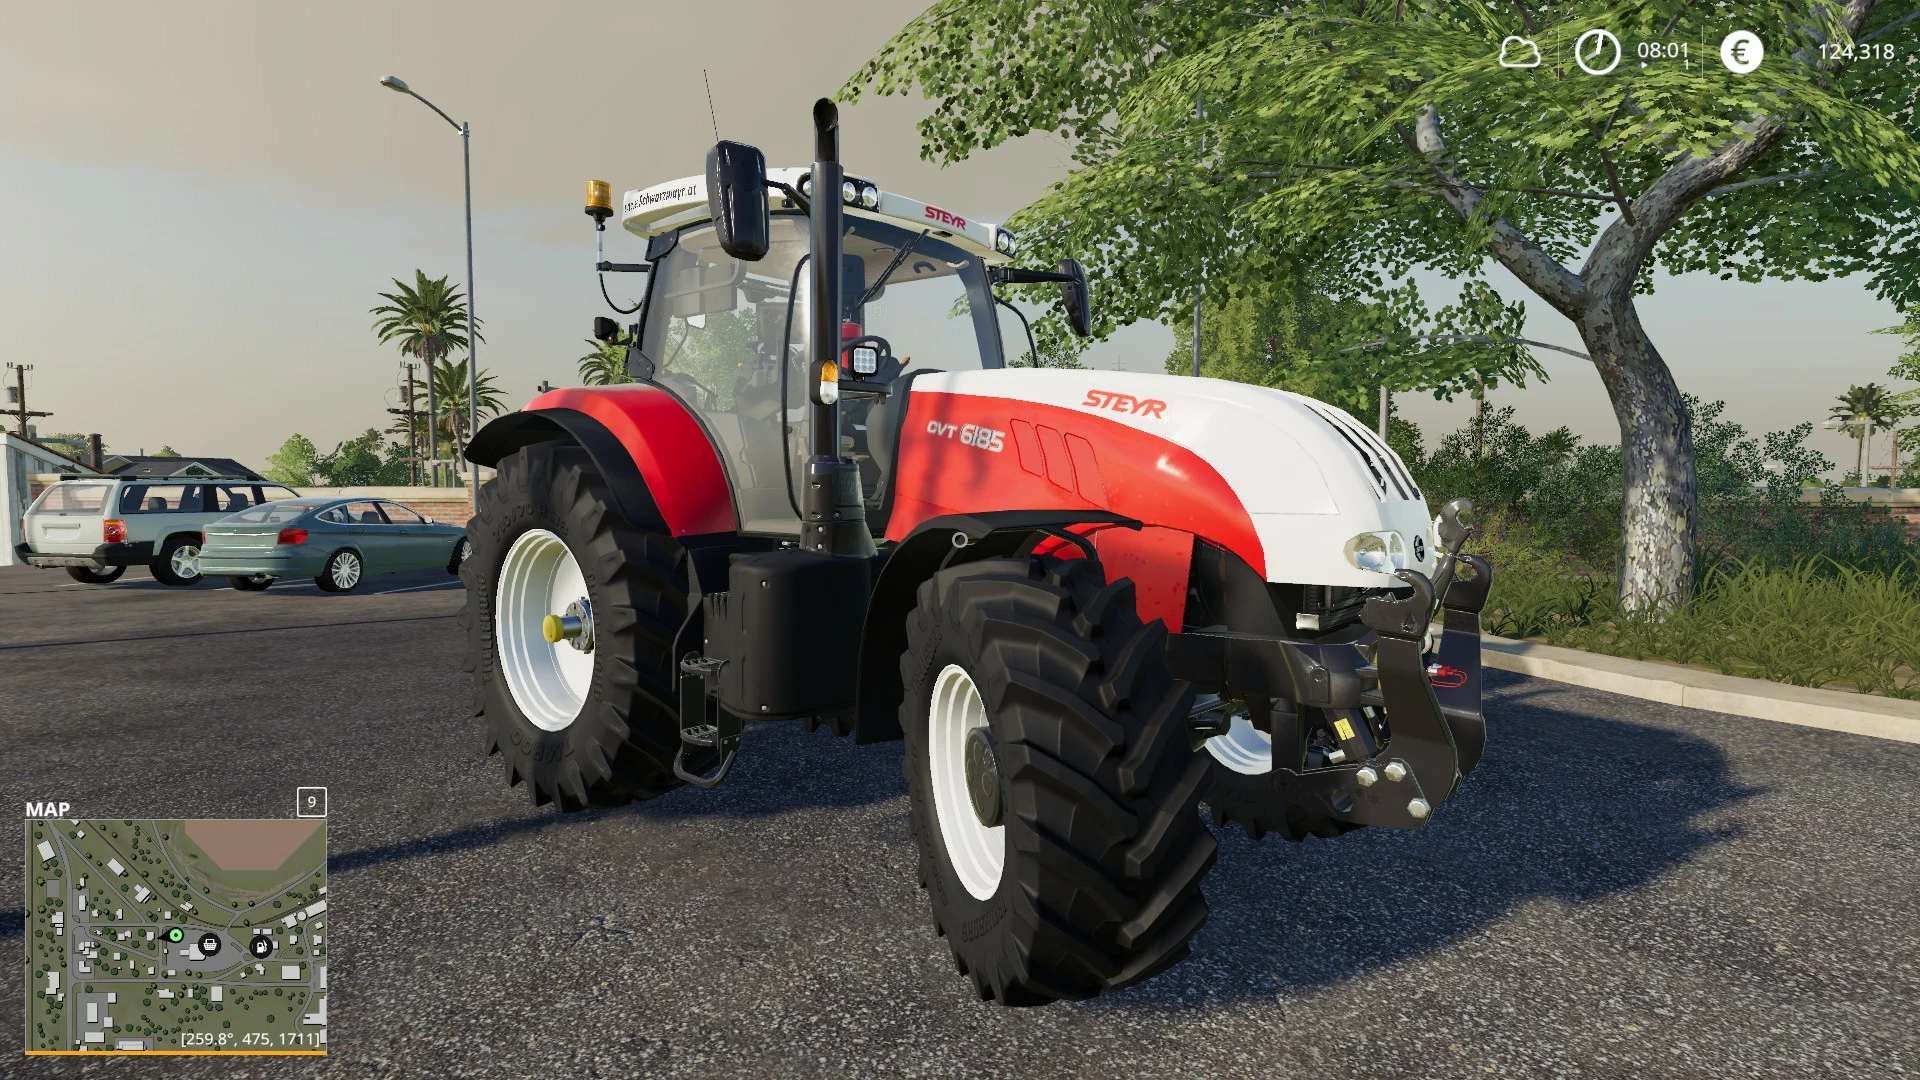 Steyr Tractor Pack V10 Fs19 Farming Simulator 19 Mod Fs19 Mod Images And Photos Finder 9279